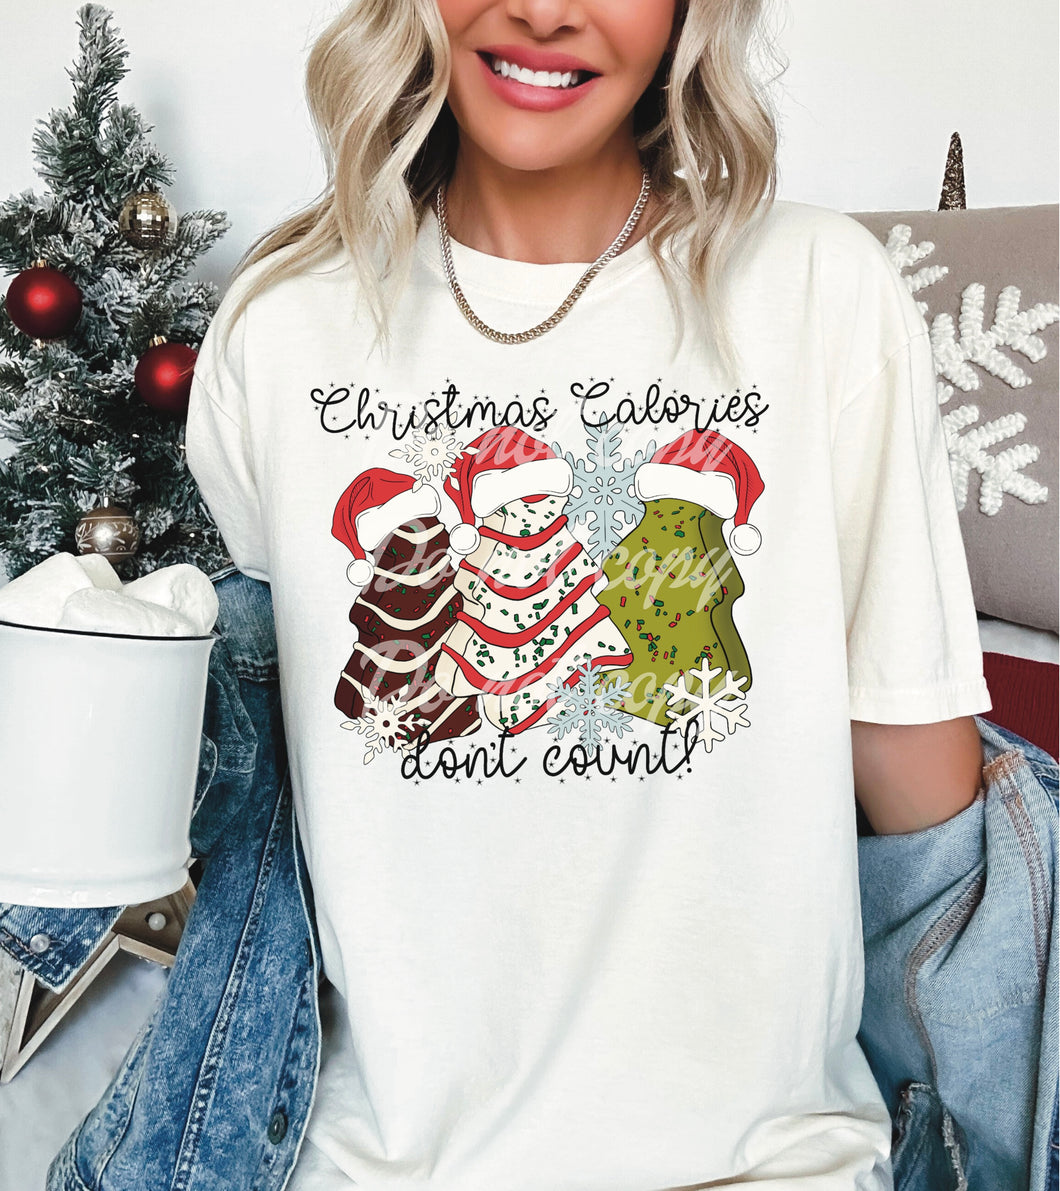 Christmas Calories don’t count